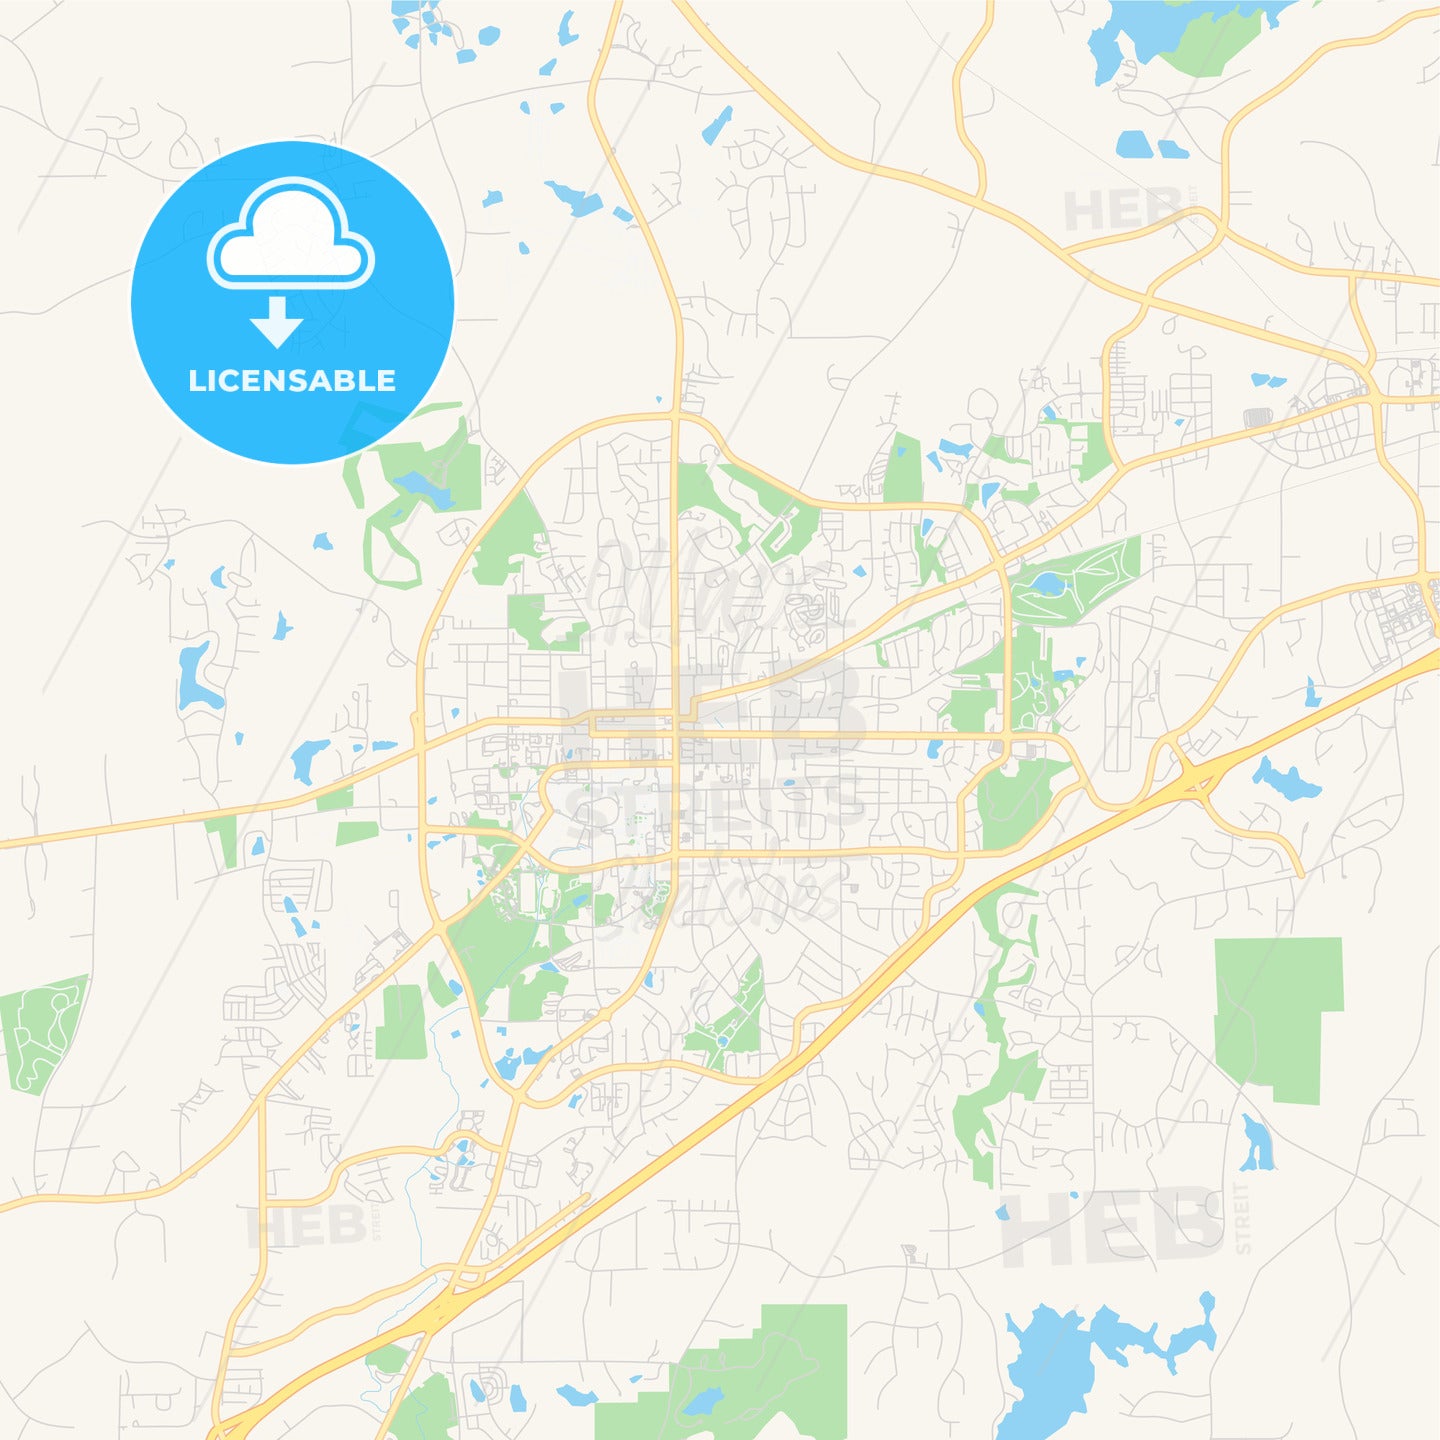 Empty vector map of Auburn, Alabama, USA